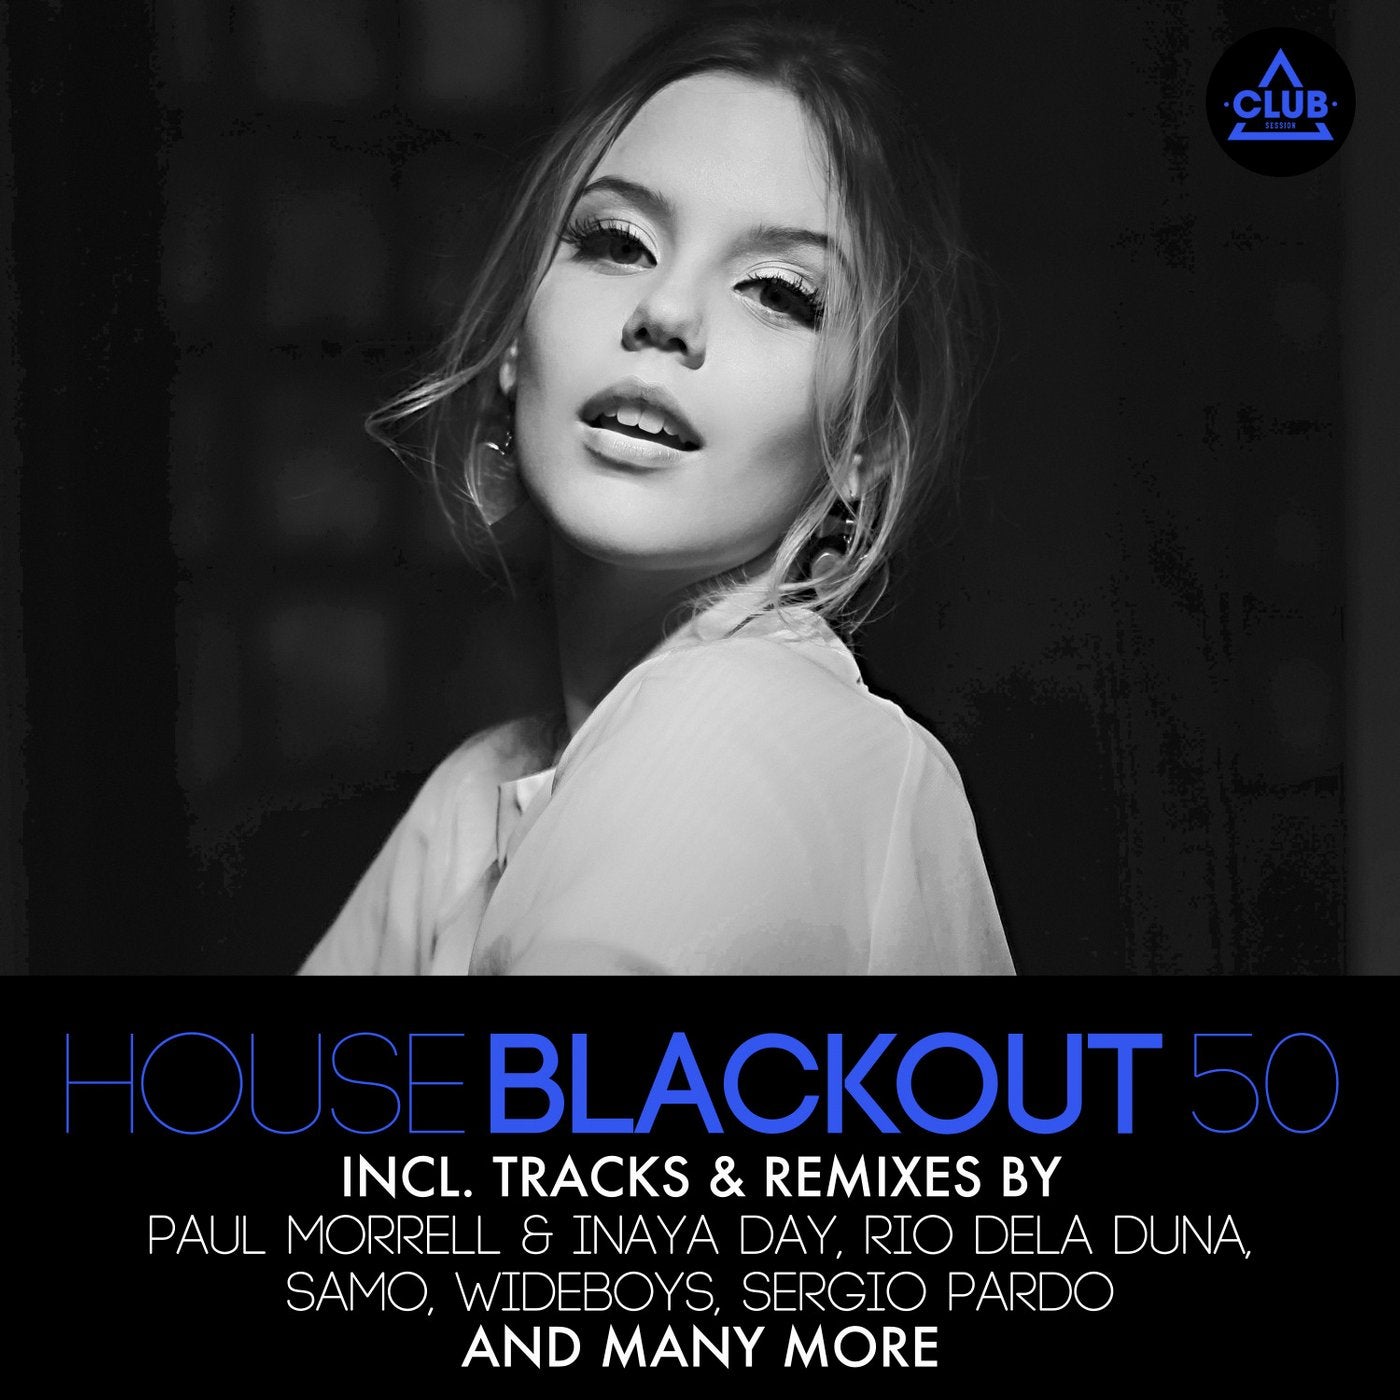 House Blackout Vol. 50